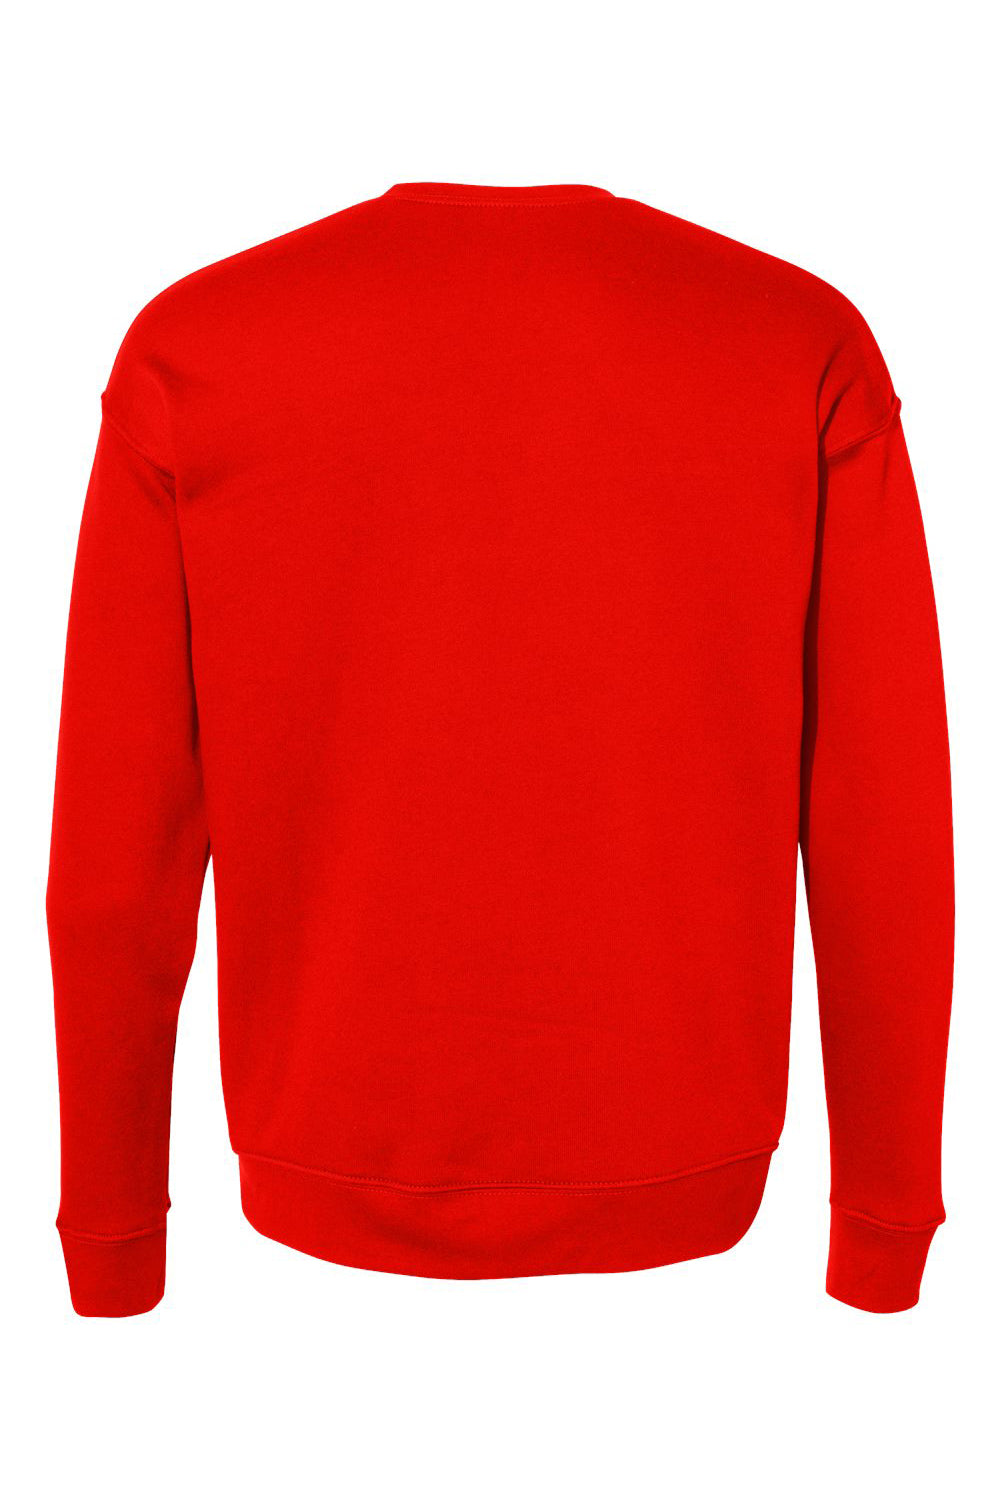 Bella + Canvas BC3945/3945 Mens Fleece Crewneck Sweatshirt Poppy Red Flat Back